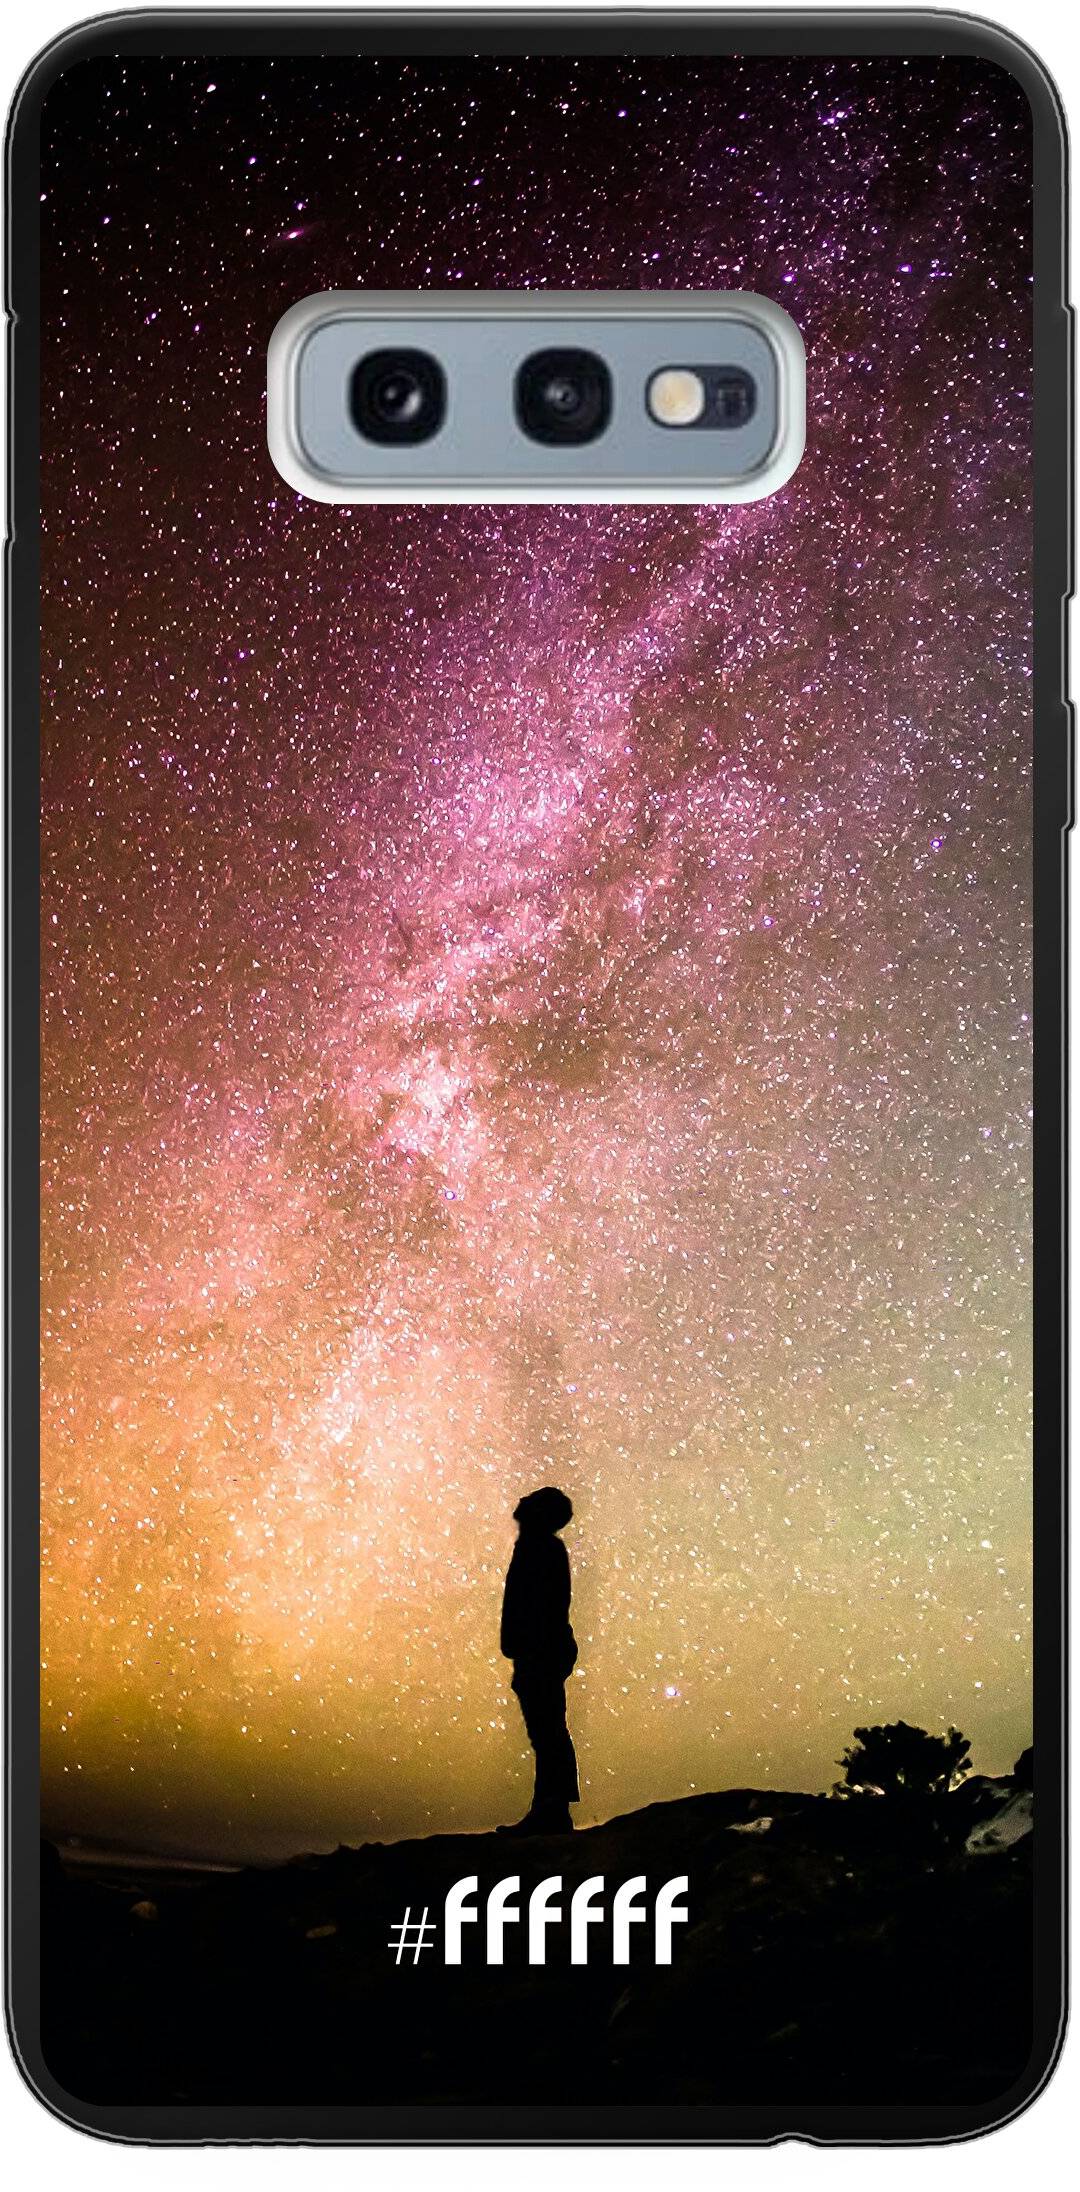 Watching the Stars Galaxy S10e